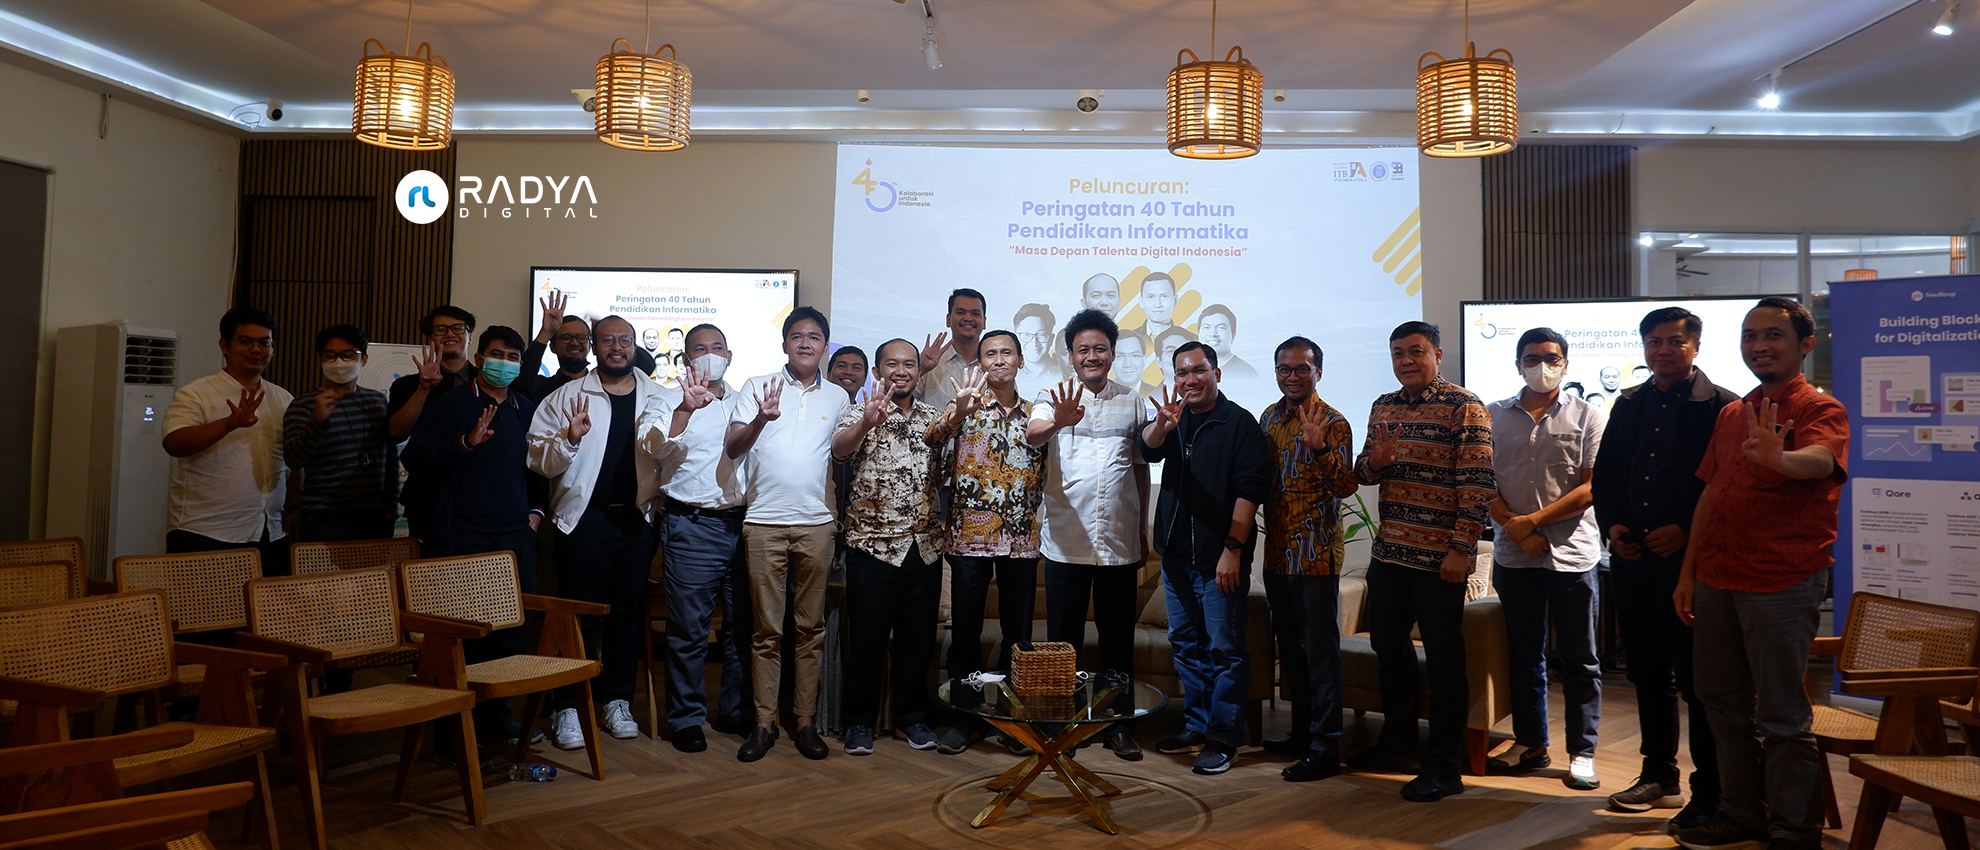 Image of Rayakan 40 Tahun Pendidikan Informatika di Indonesia, IAIF ITB Usung Kolaborasi untuk Memecahkan Masalah Talenta Digital